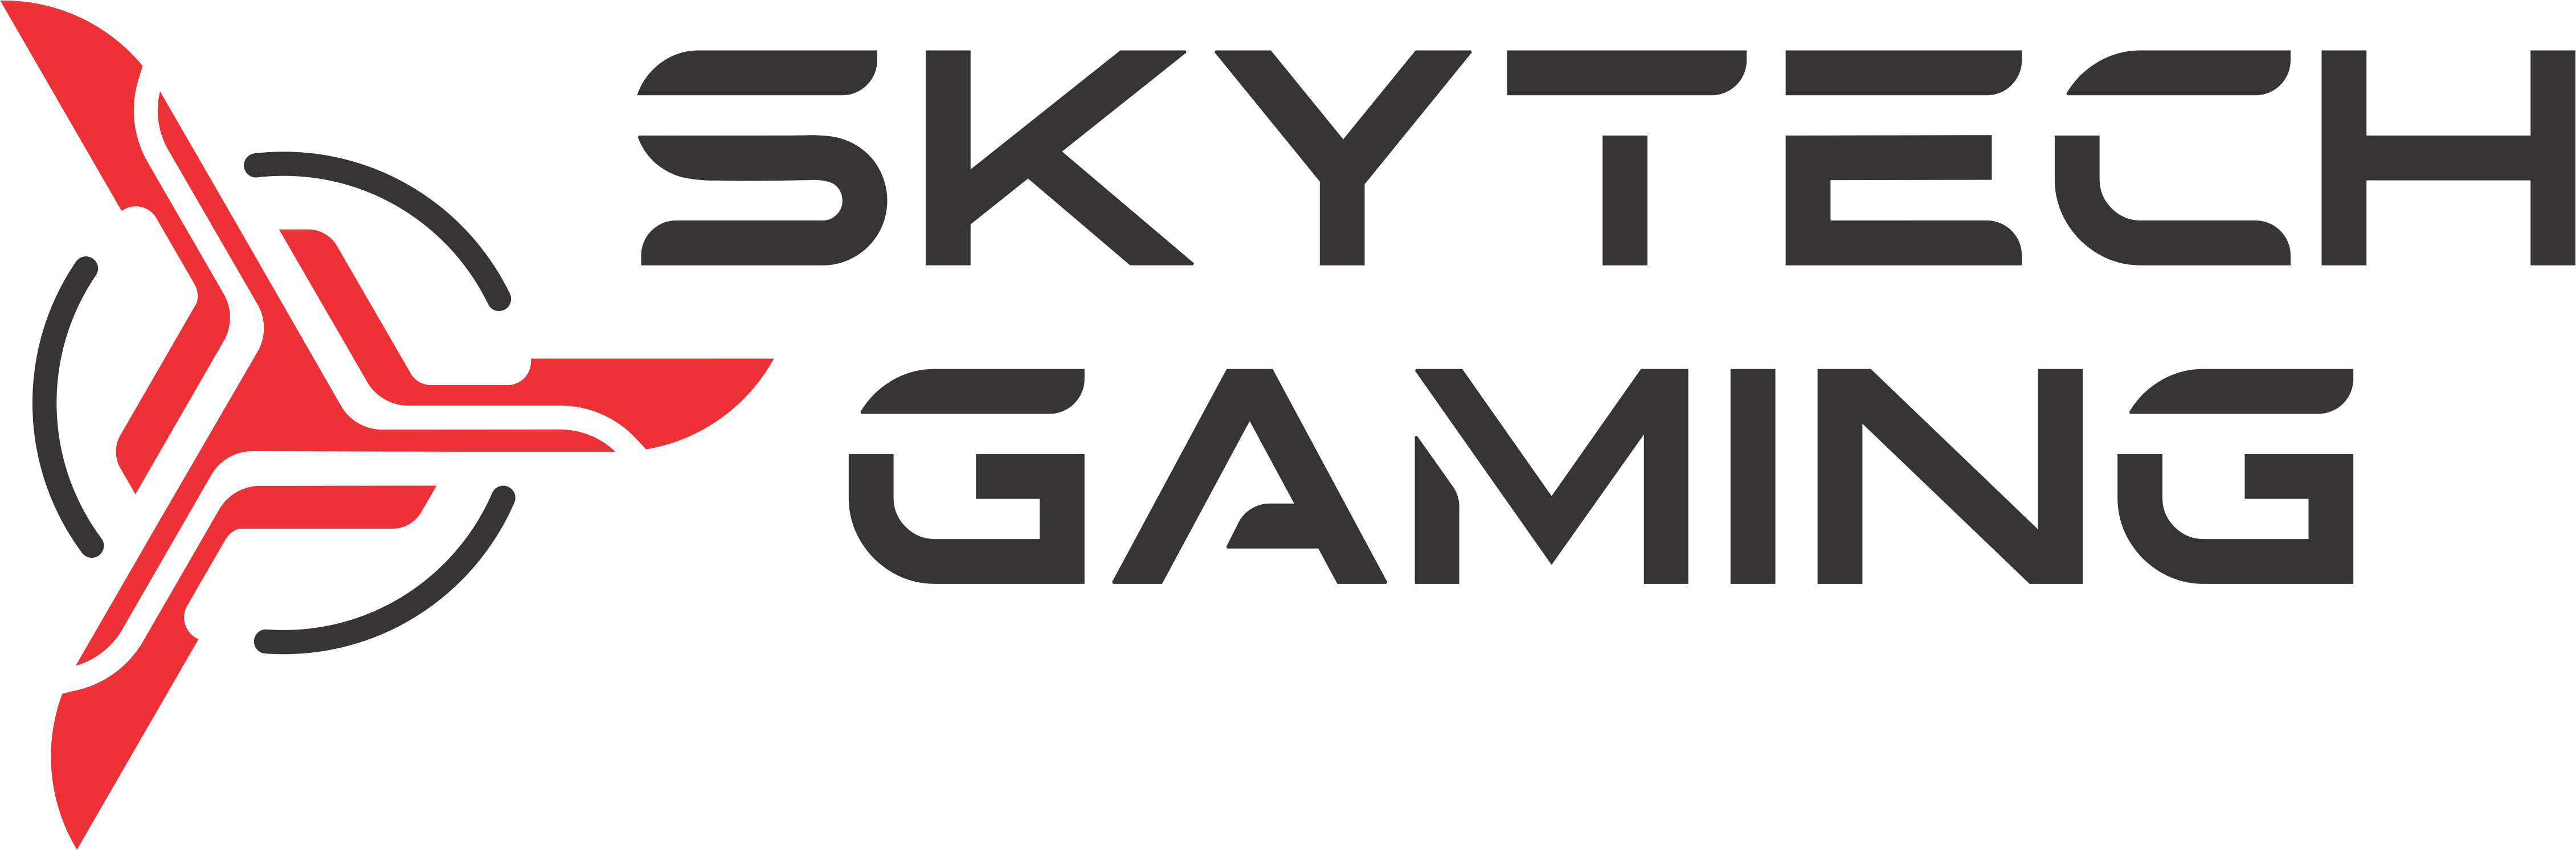 Skytech Prism II Gaming PC Desktop - AMD Ryzen 9 3900X 3.8GHz, RTX 3090  24GB, 32GB 3600mhz RGB Memory, 1TB Gen4 SSD, 360mm AIO